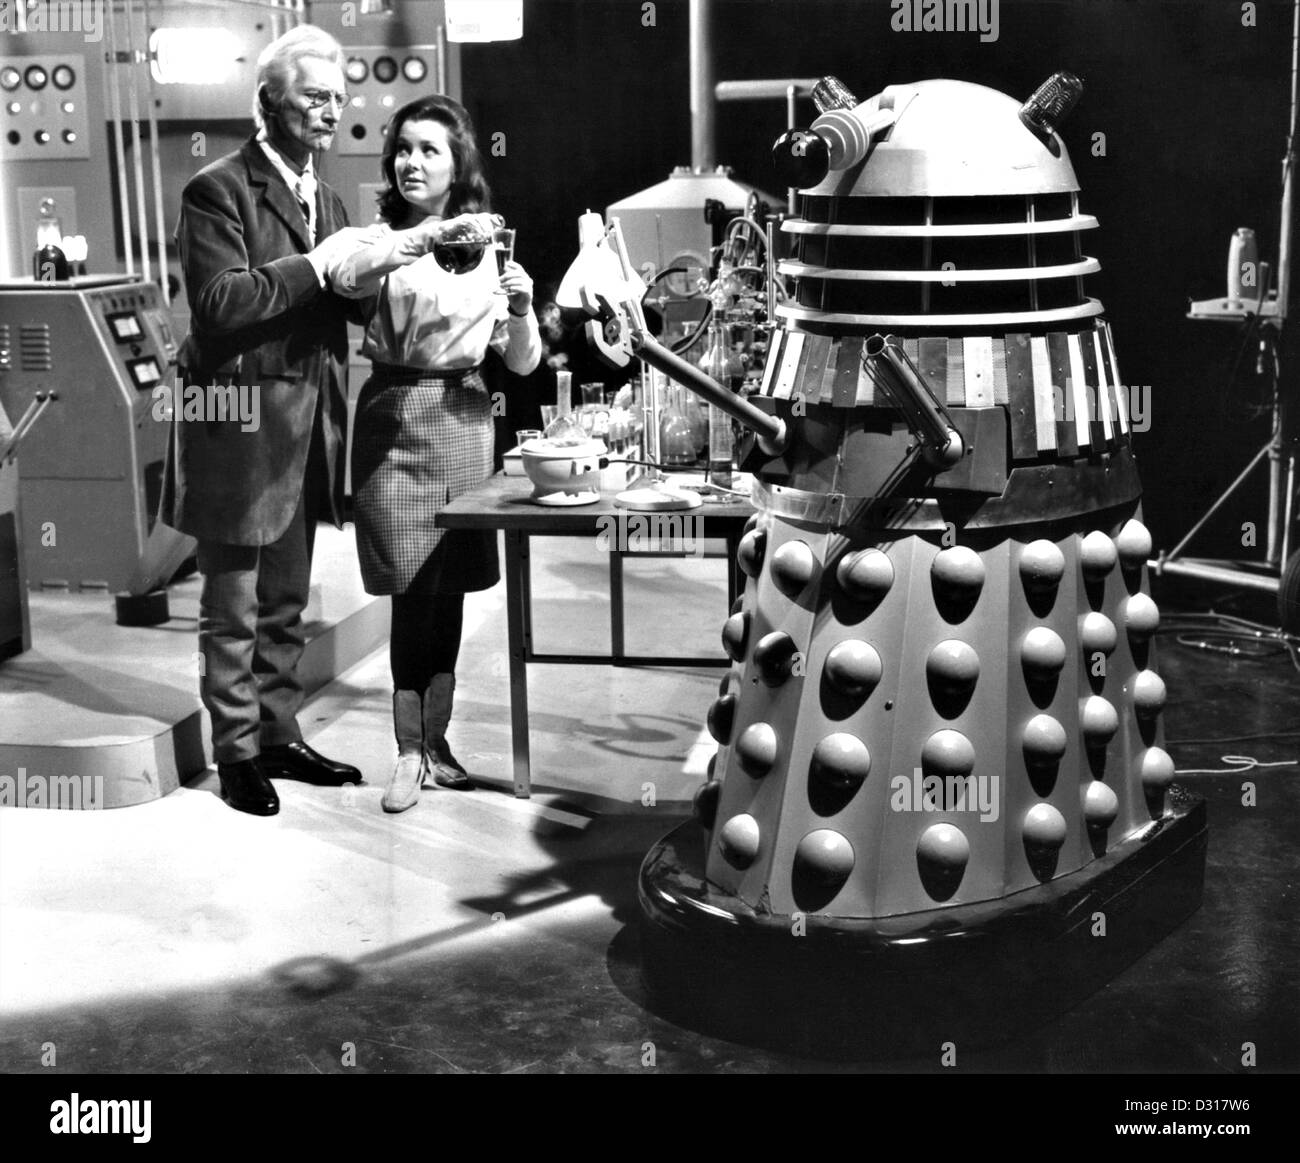 Daleks' Invasion Earth: 2150 A.D. Stock Photo